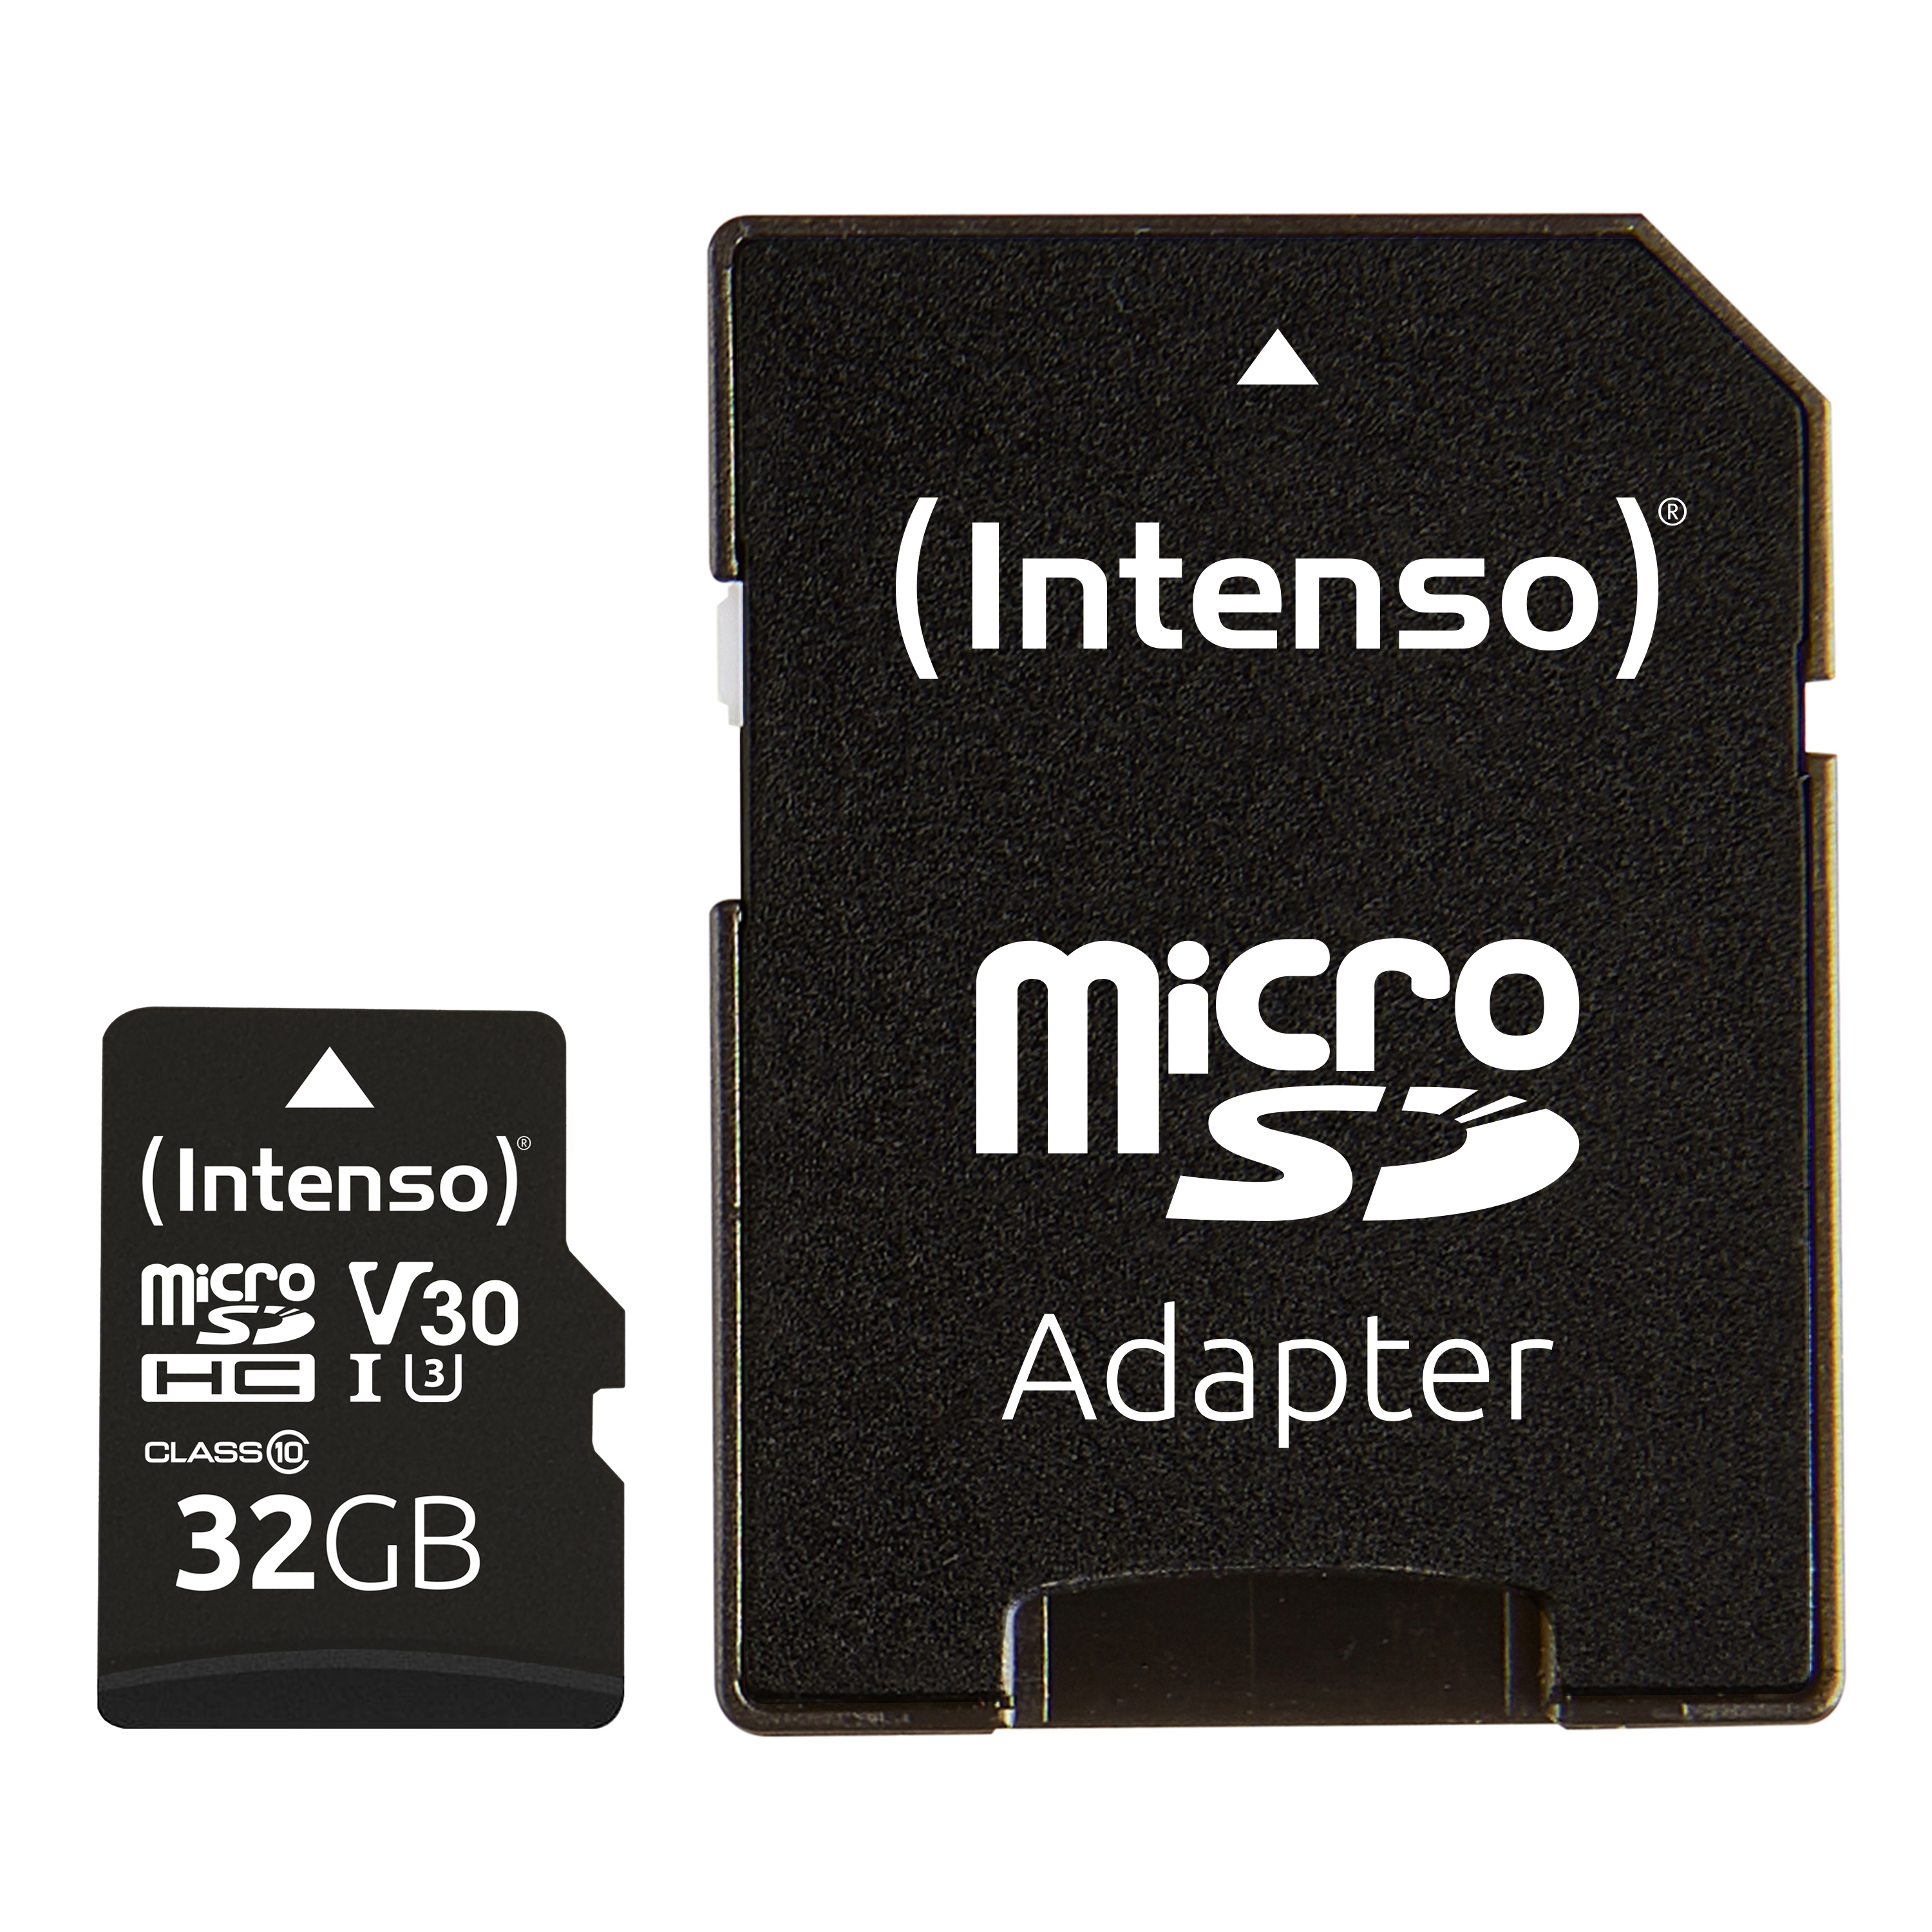 INTENSO Intenso microSD SDHC 32 90 Micro-SDHC UHS-I Speicherkarte, Card Professional, GB, MB/s 32GB